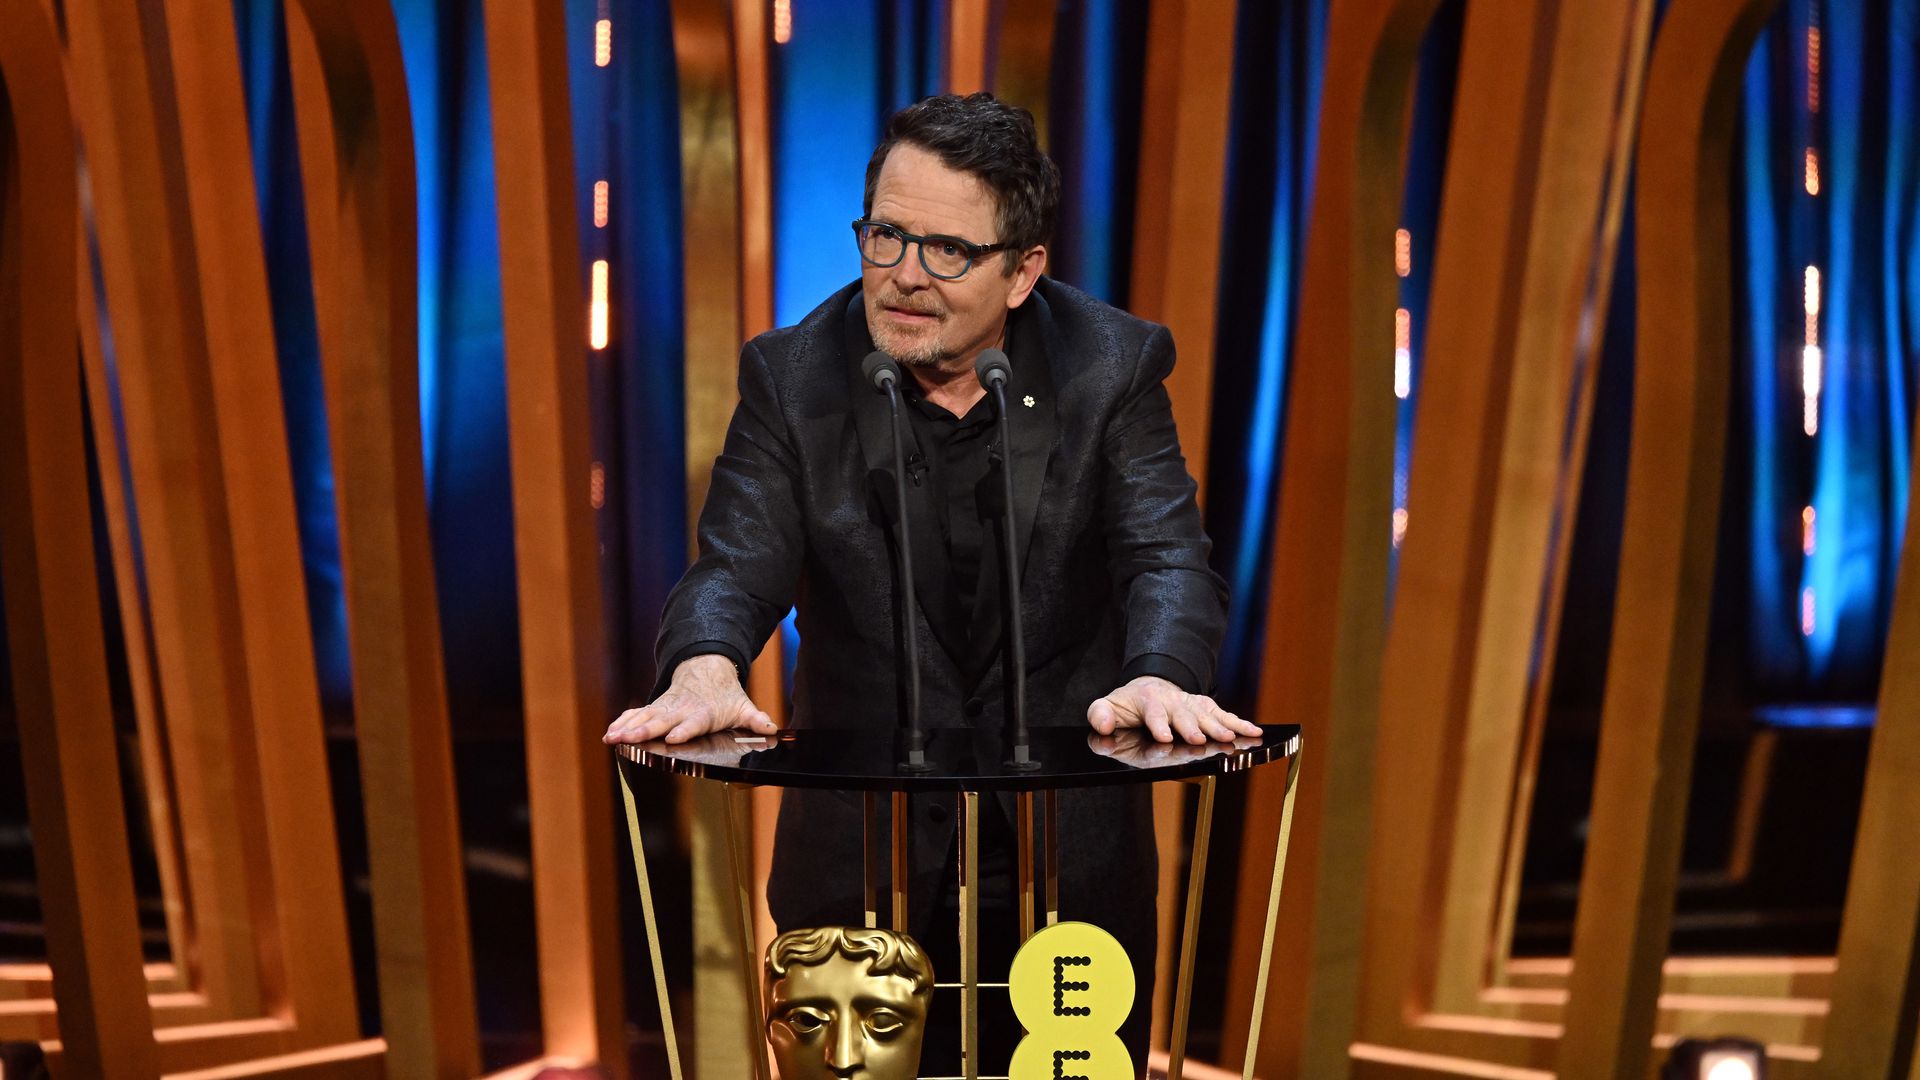 Michael J. Fox receives standing ovation as he presents BAFTA Best Film to Oppenheimer